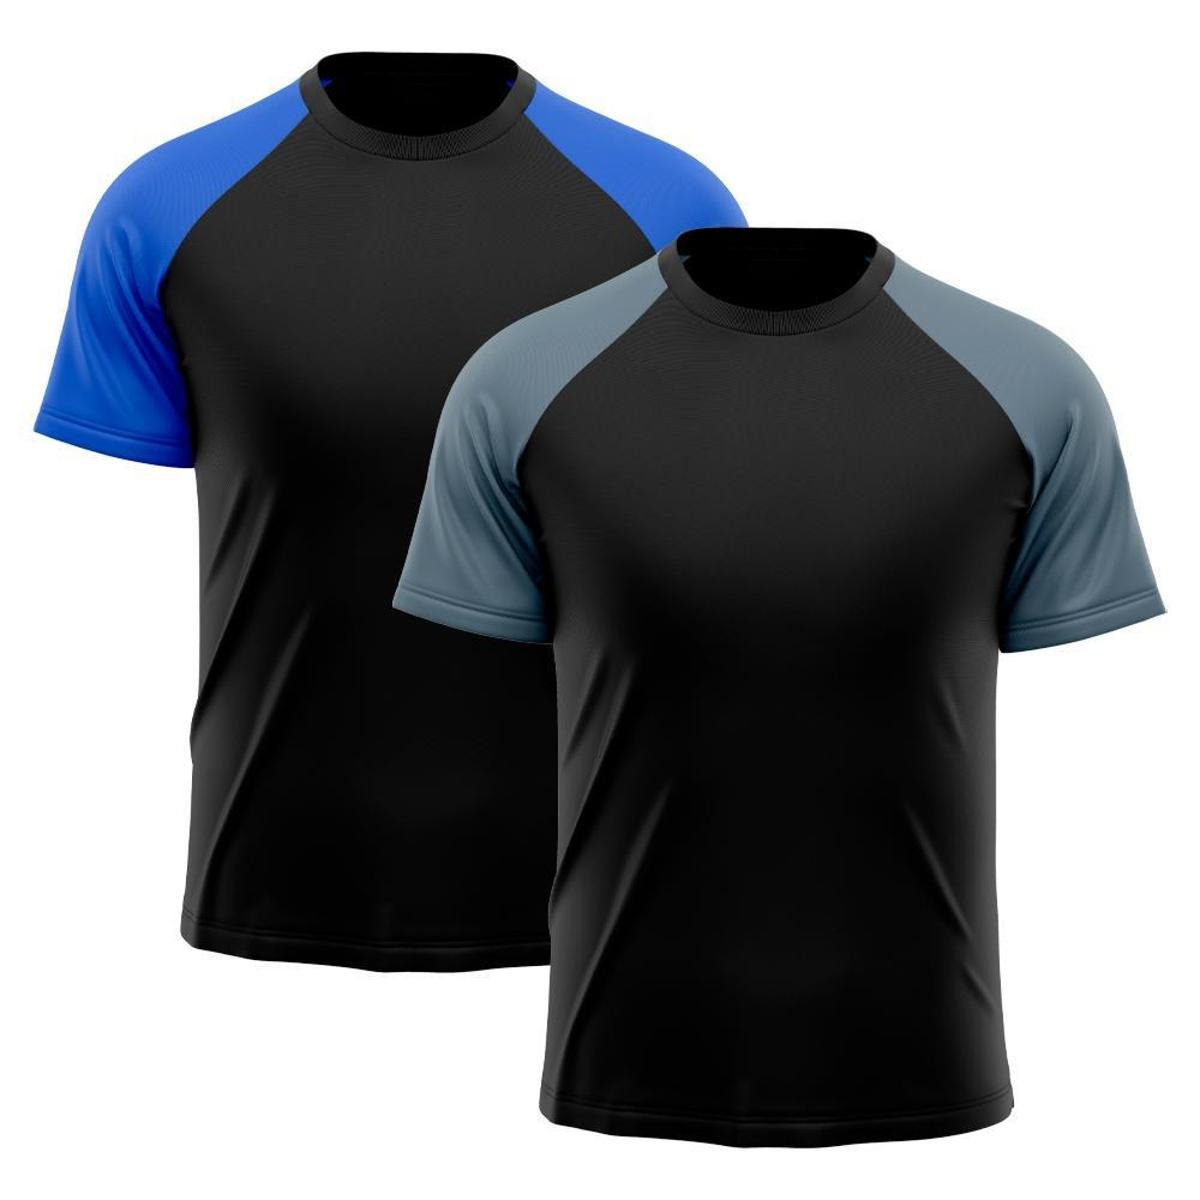 Kit 2 Camiseta Masculina Raglan Dry Proteção Solar UV Lisa Academia Ciclismo Esporte Camisetas